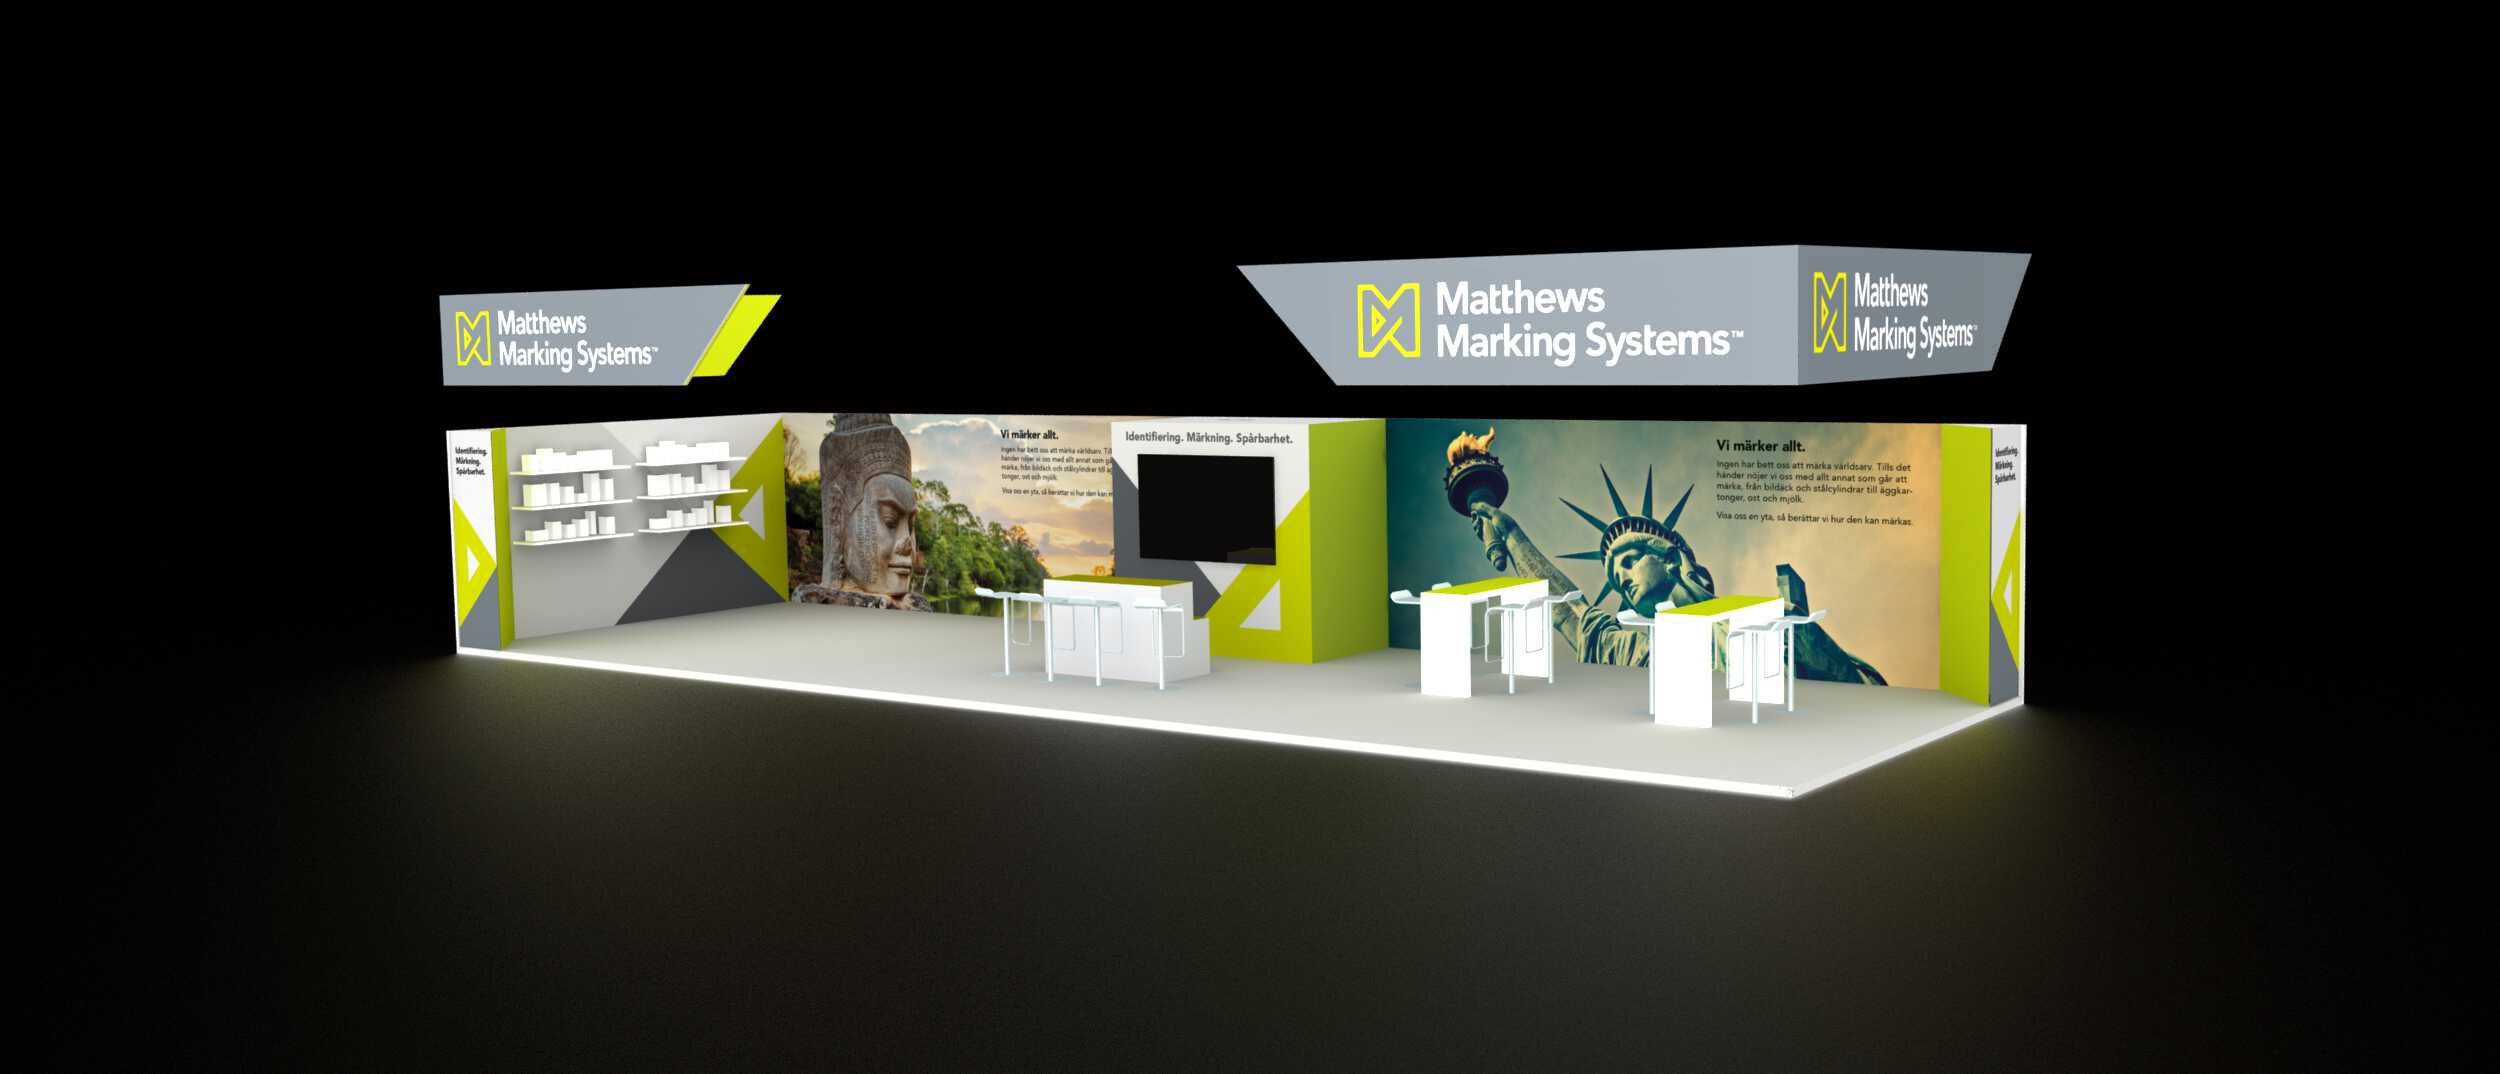 Matthews Marking Systems